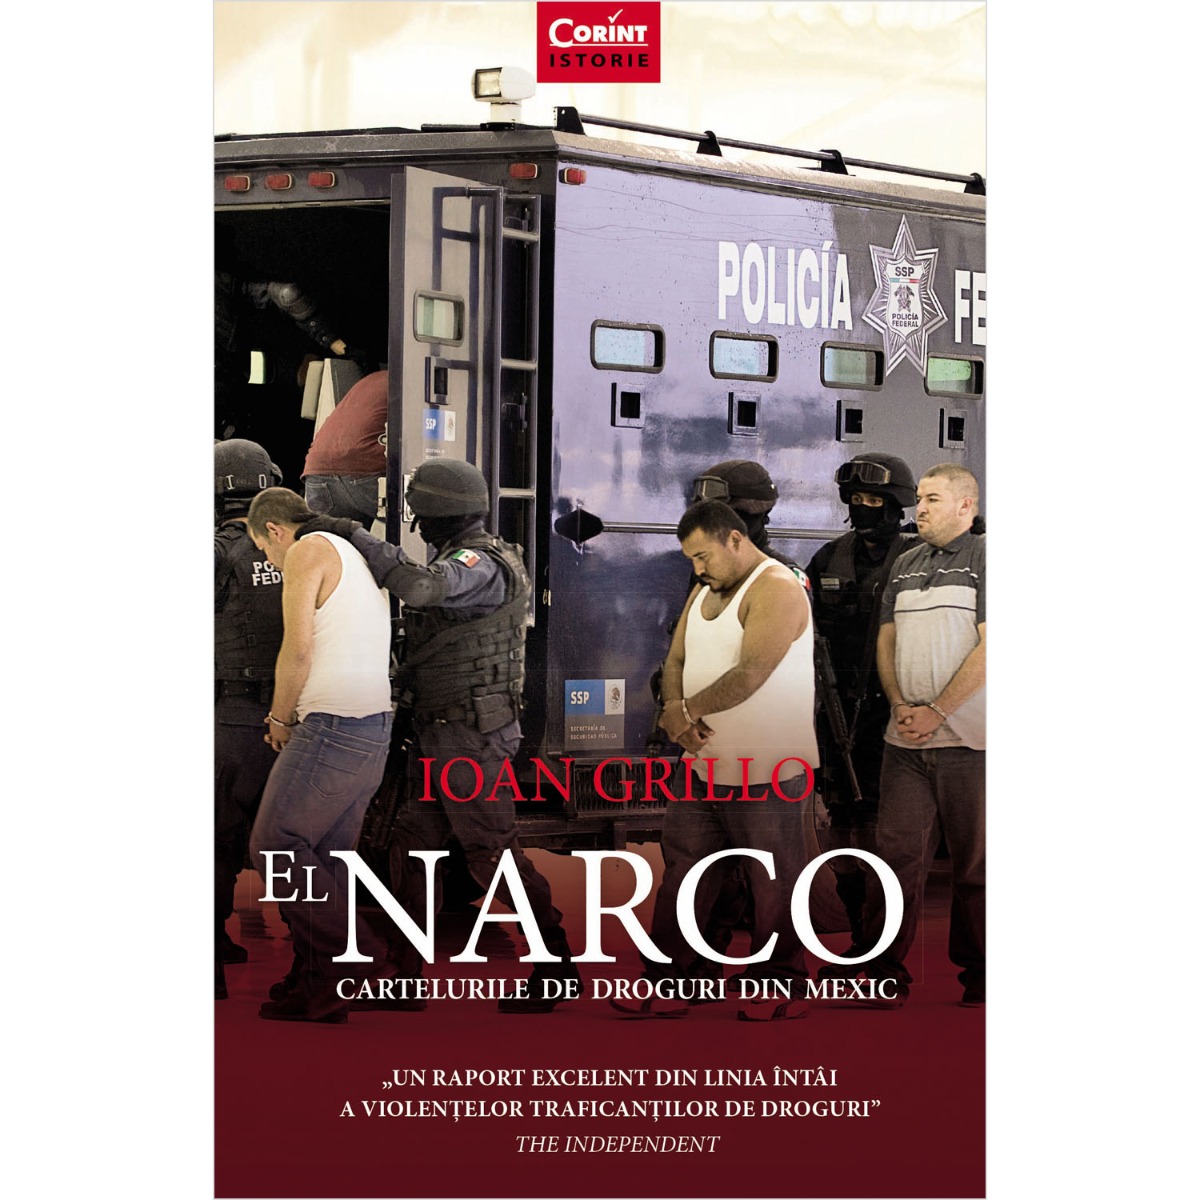 El Narco. Cartelurile de droguri din Mexic, Ioan Grillo Corint